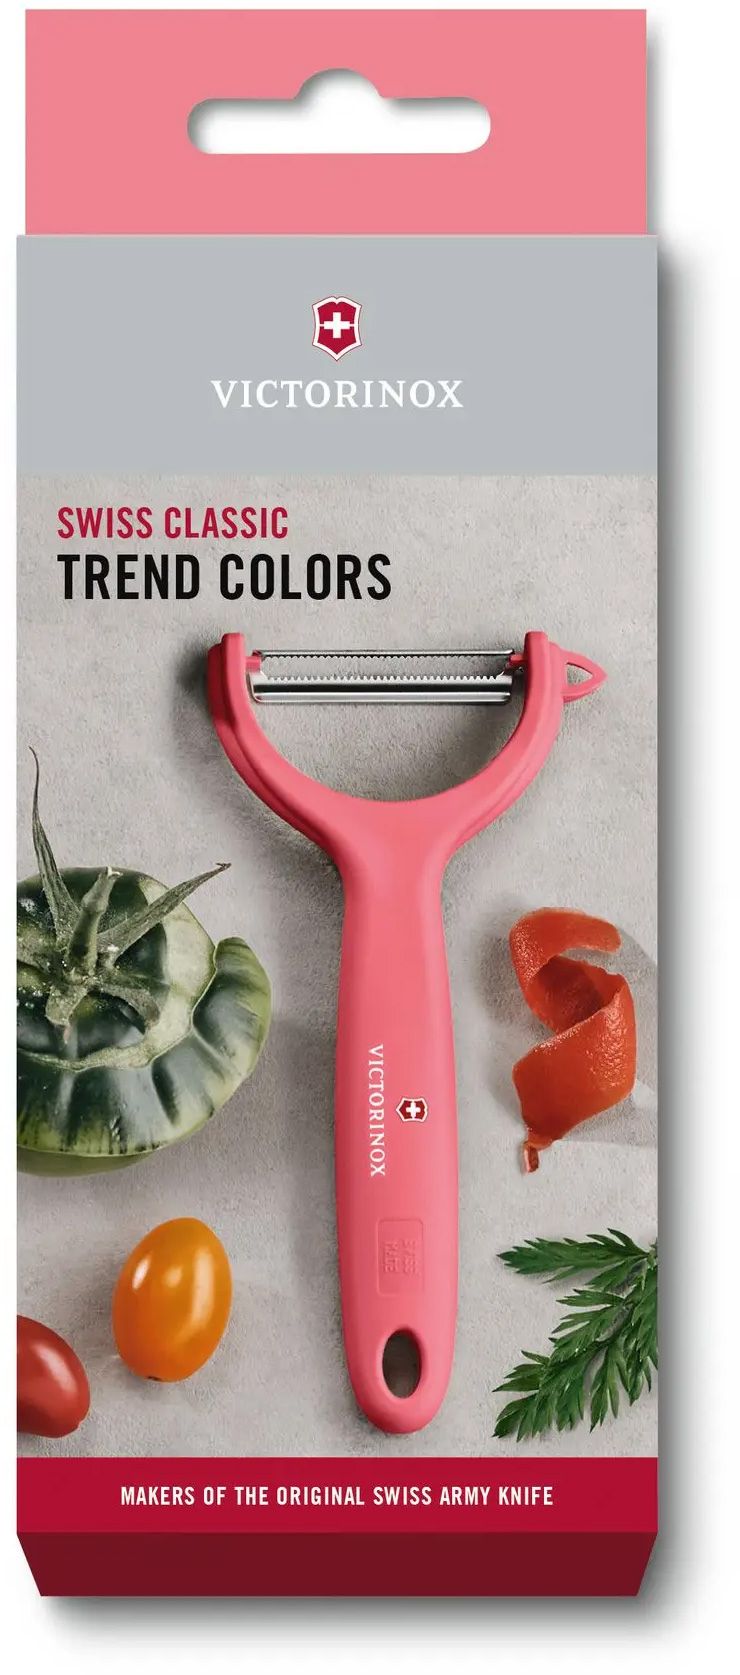 Victorinox Swiss Classic Trend Colors Tomato and Kiwi Peeler